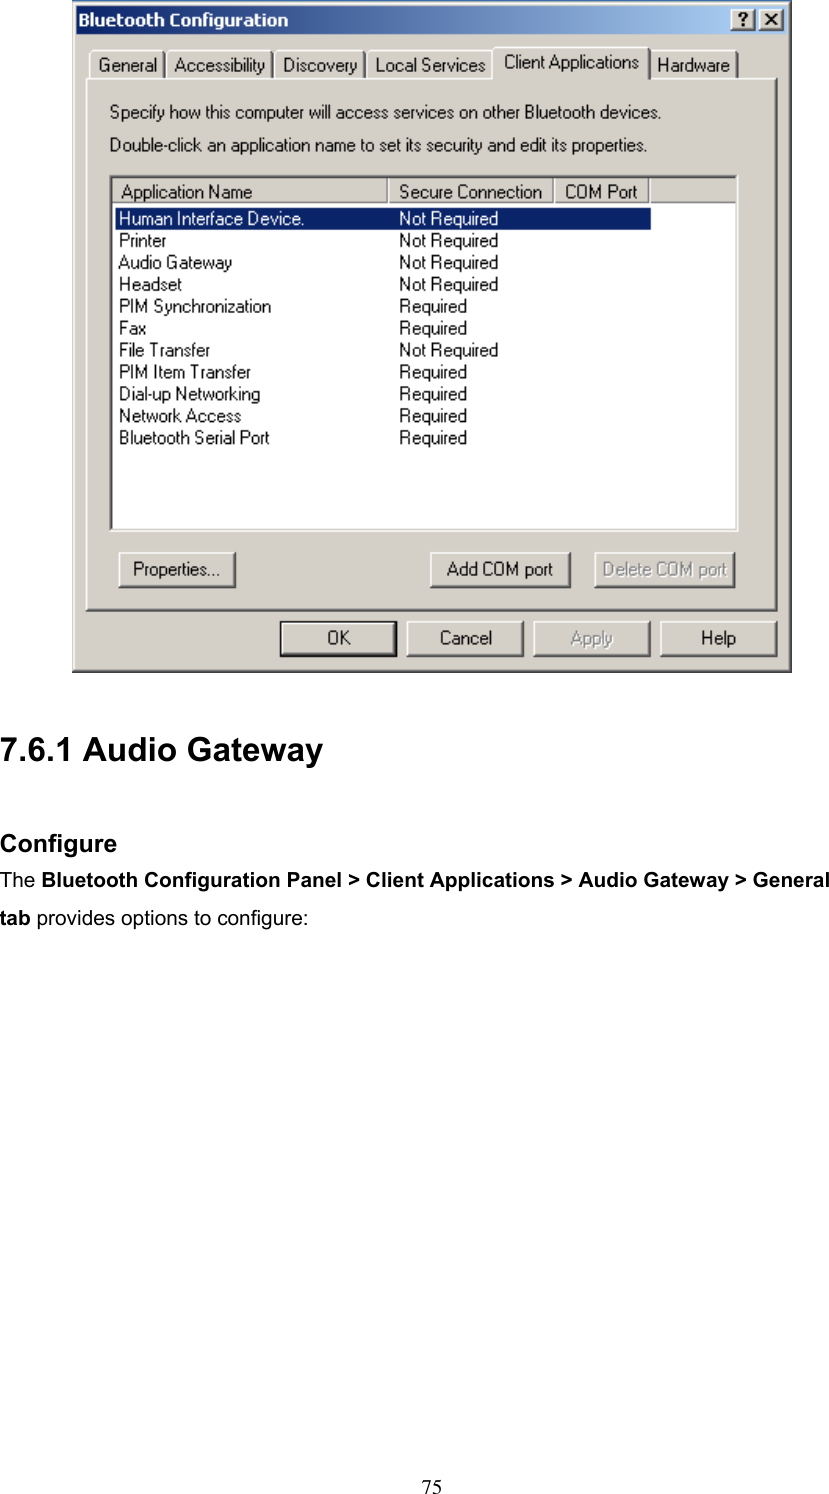   7.6.1 Audio Gateway  Configure The Bluetooth Configuration Panel &gt; Client Applications &gt; Audio Gateway &gt; General tab provides options to configure:  75 